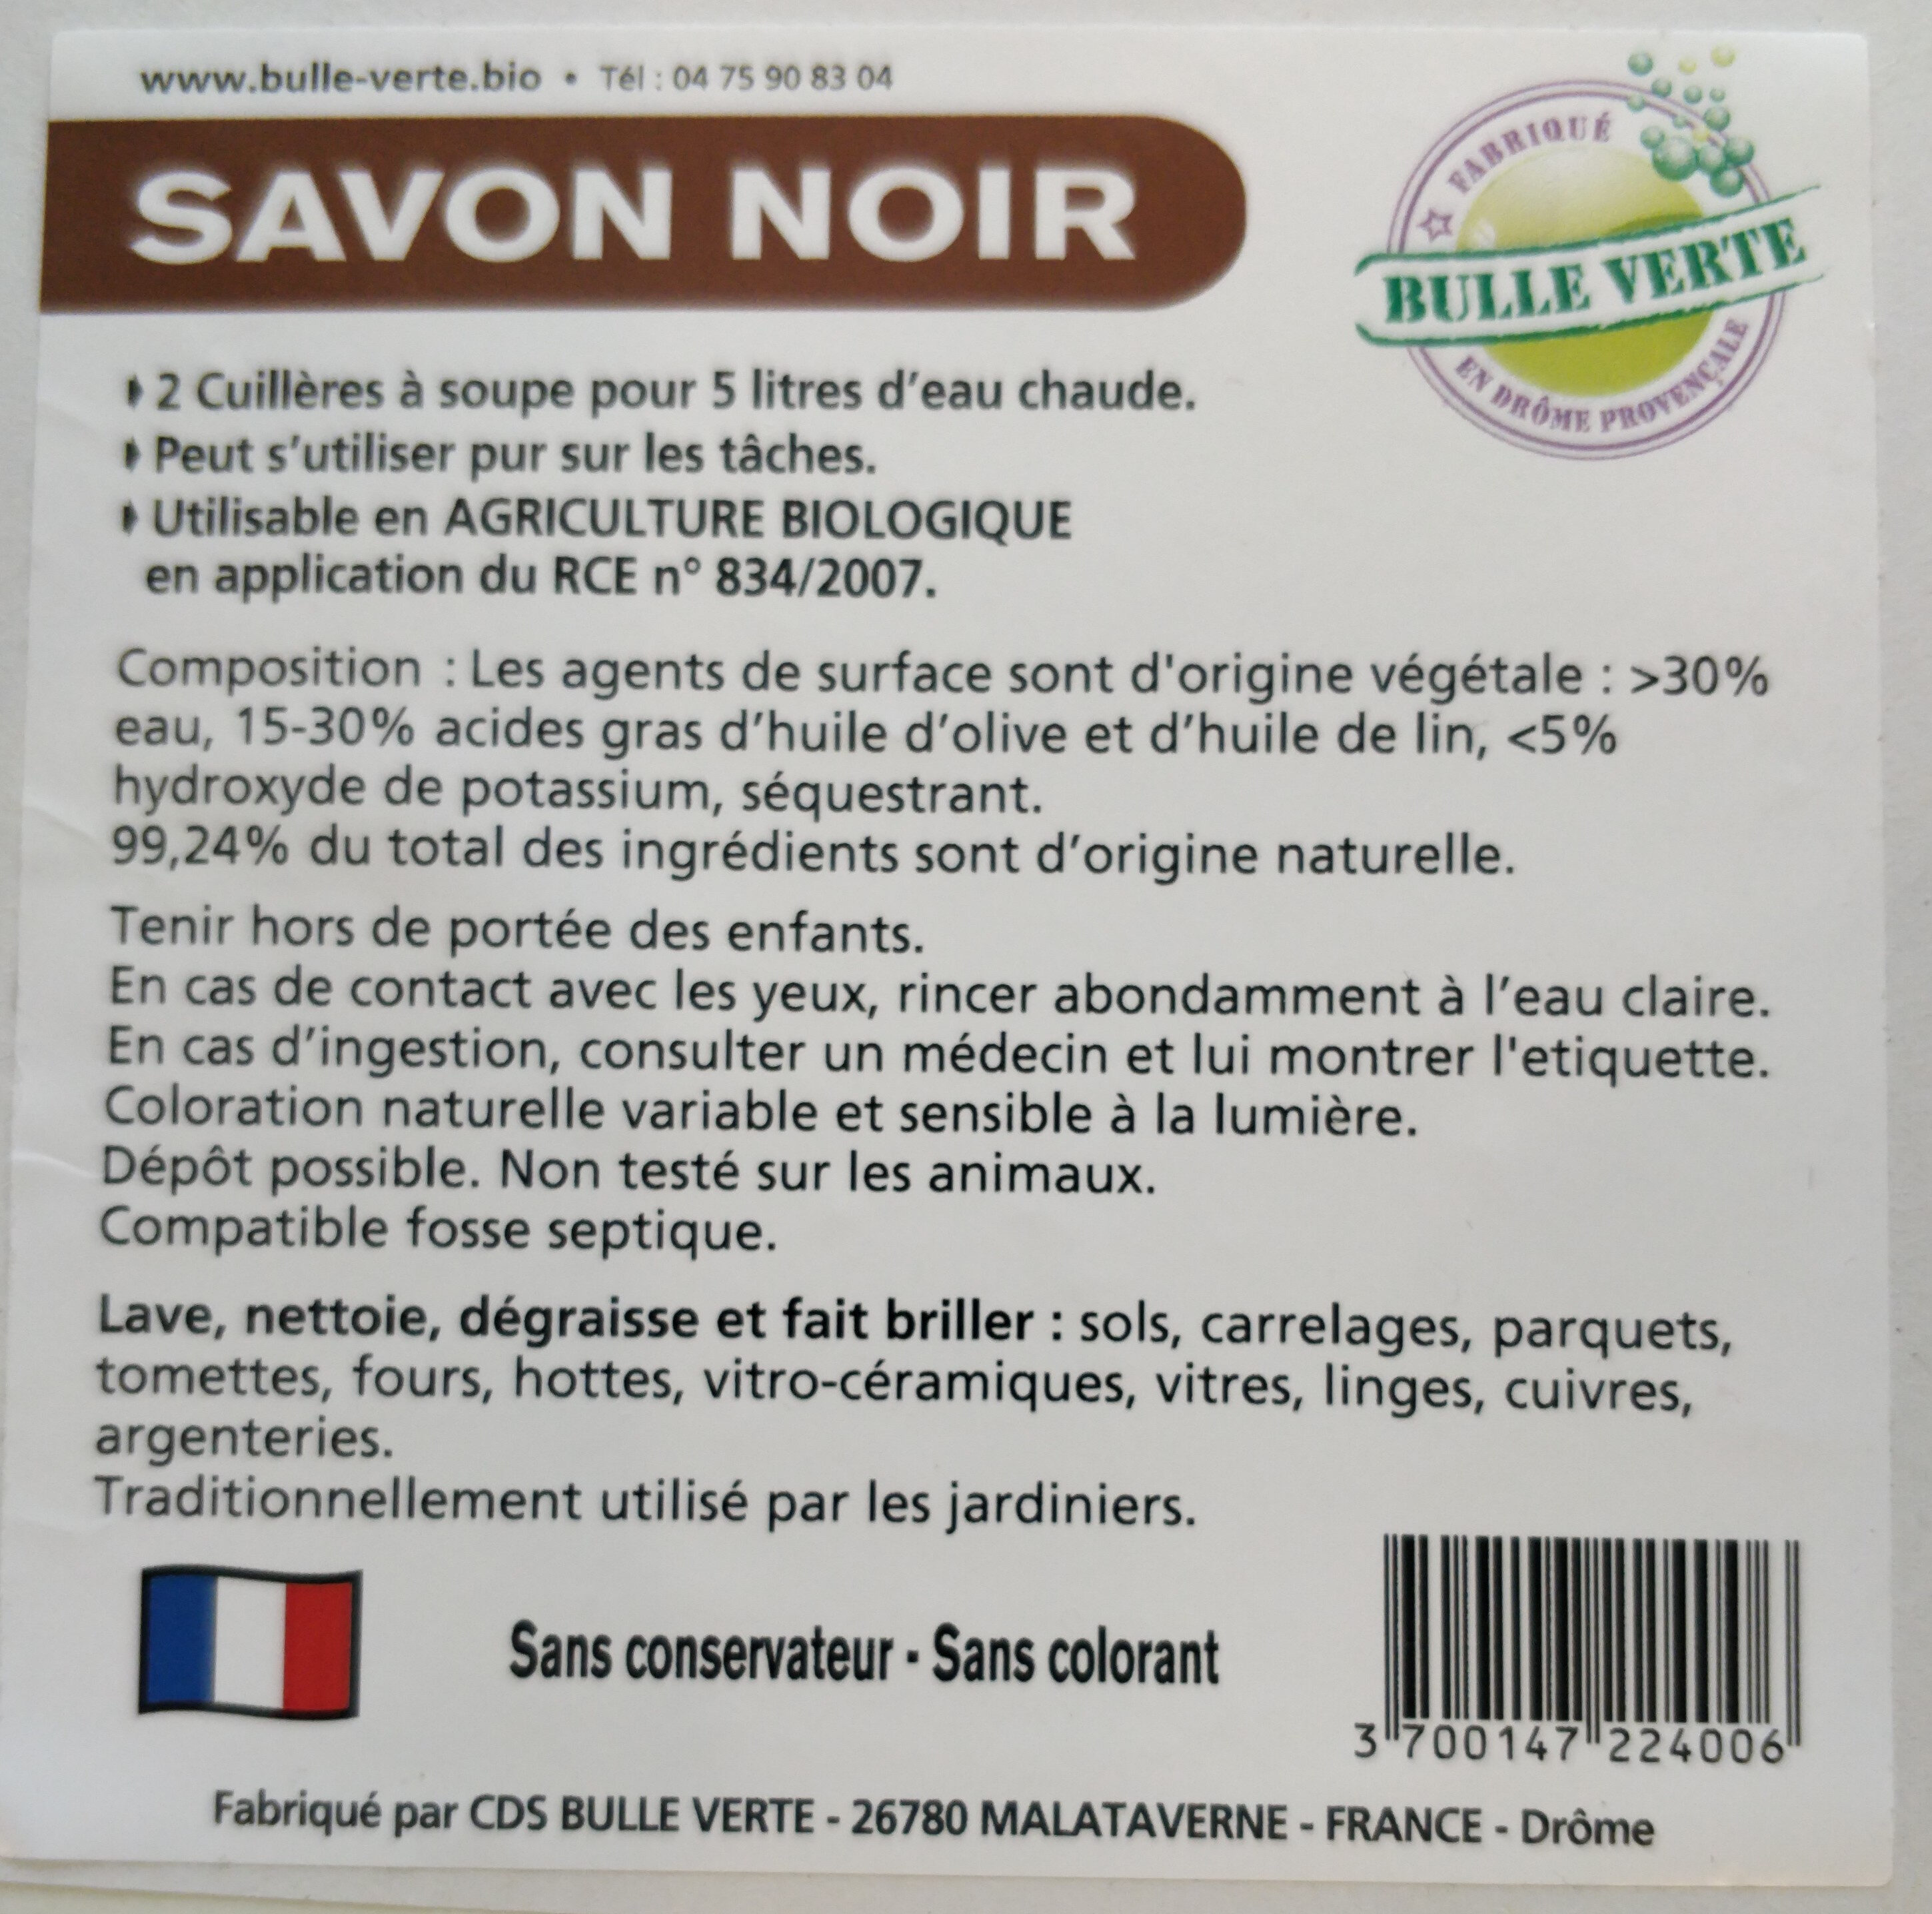 Savon noir - Product - fr